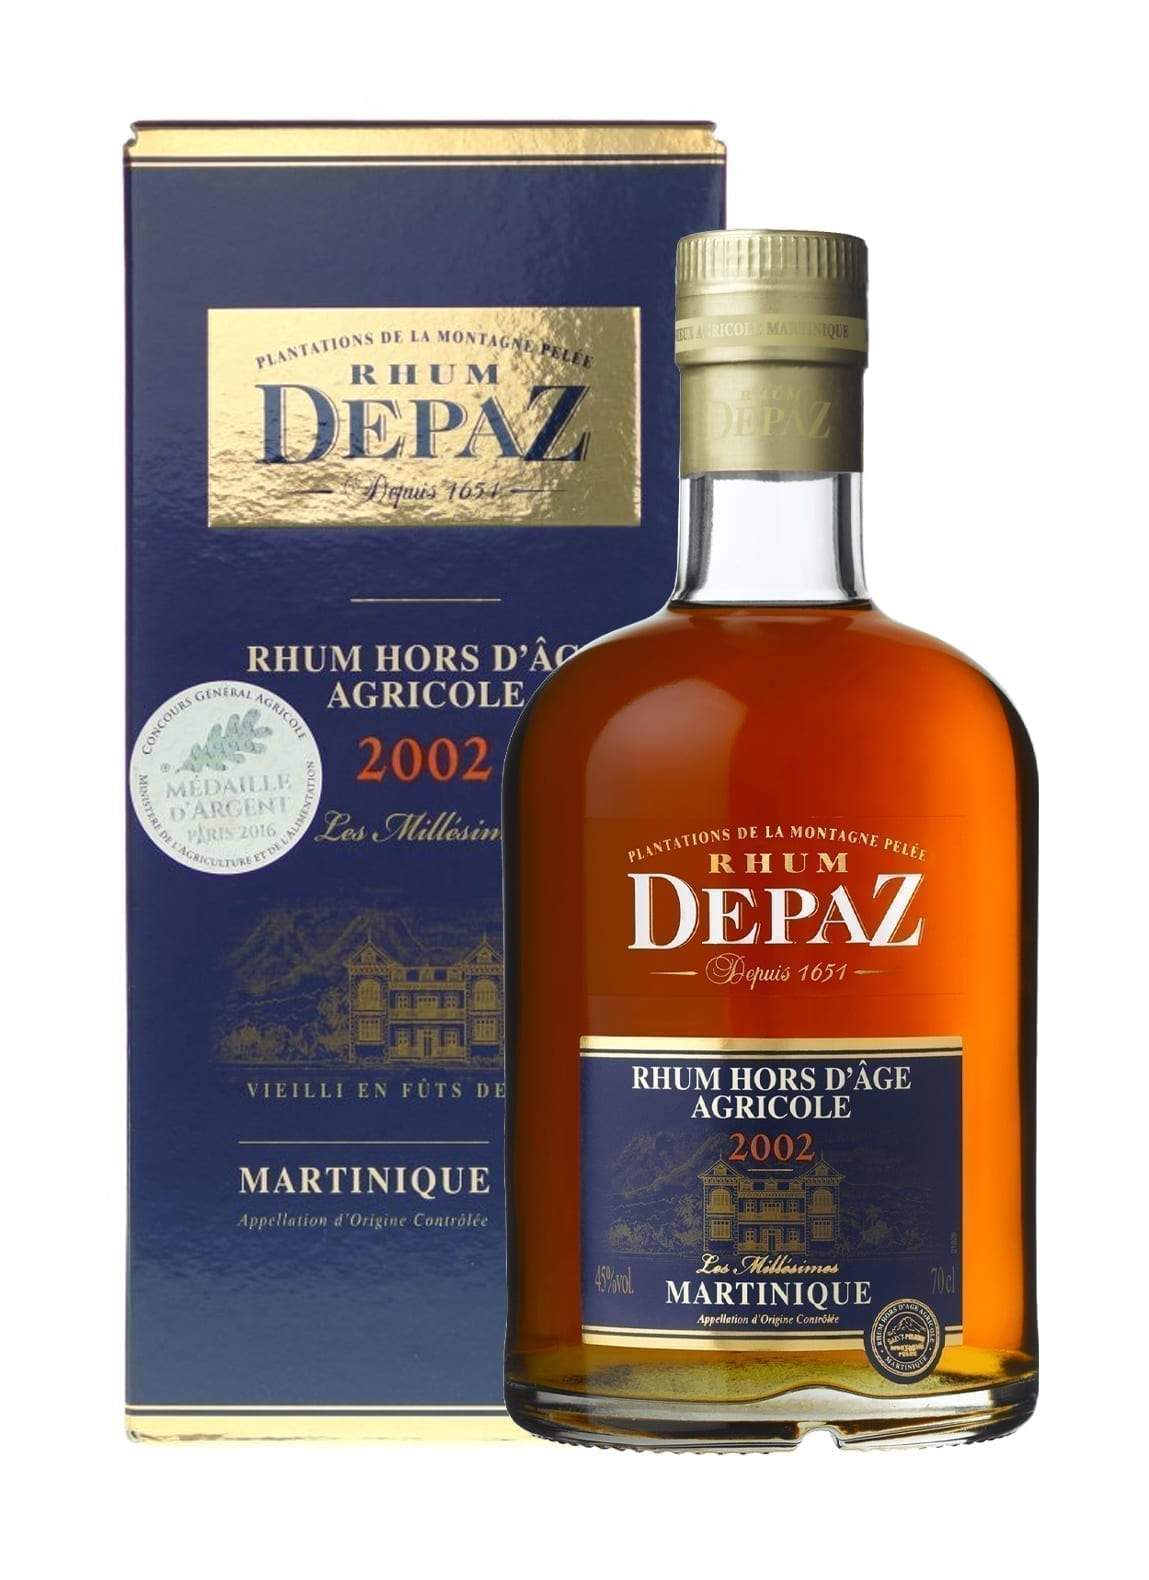 Depaz Rum Agricole 2002 45% 700ml | Rum | Shop online at Spirits of France